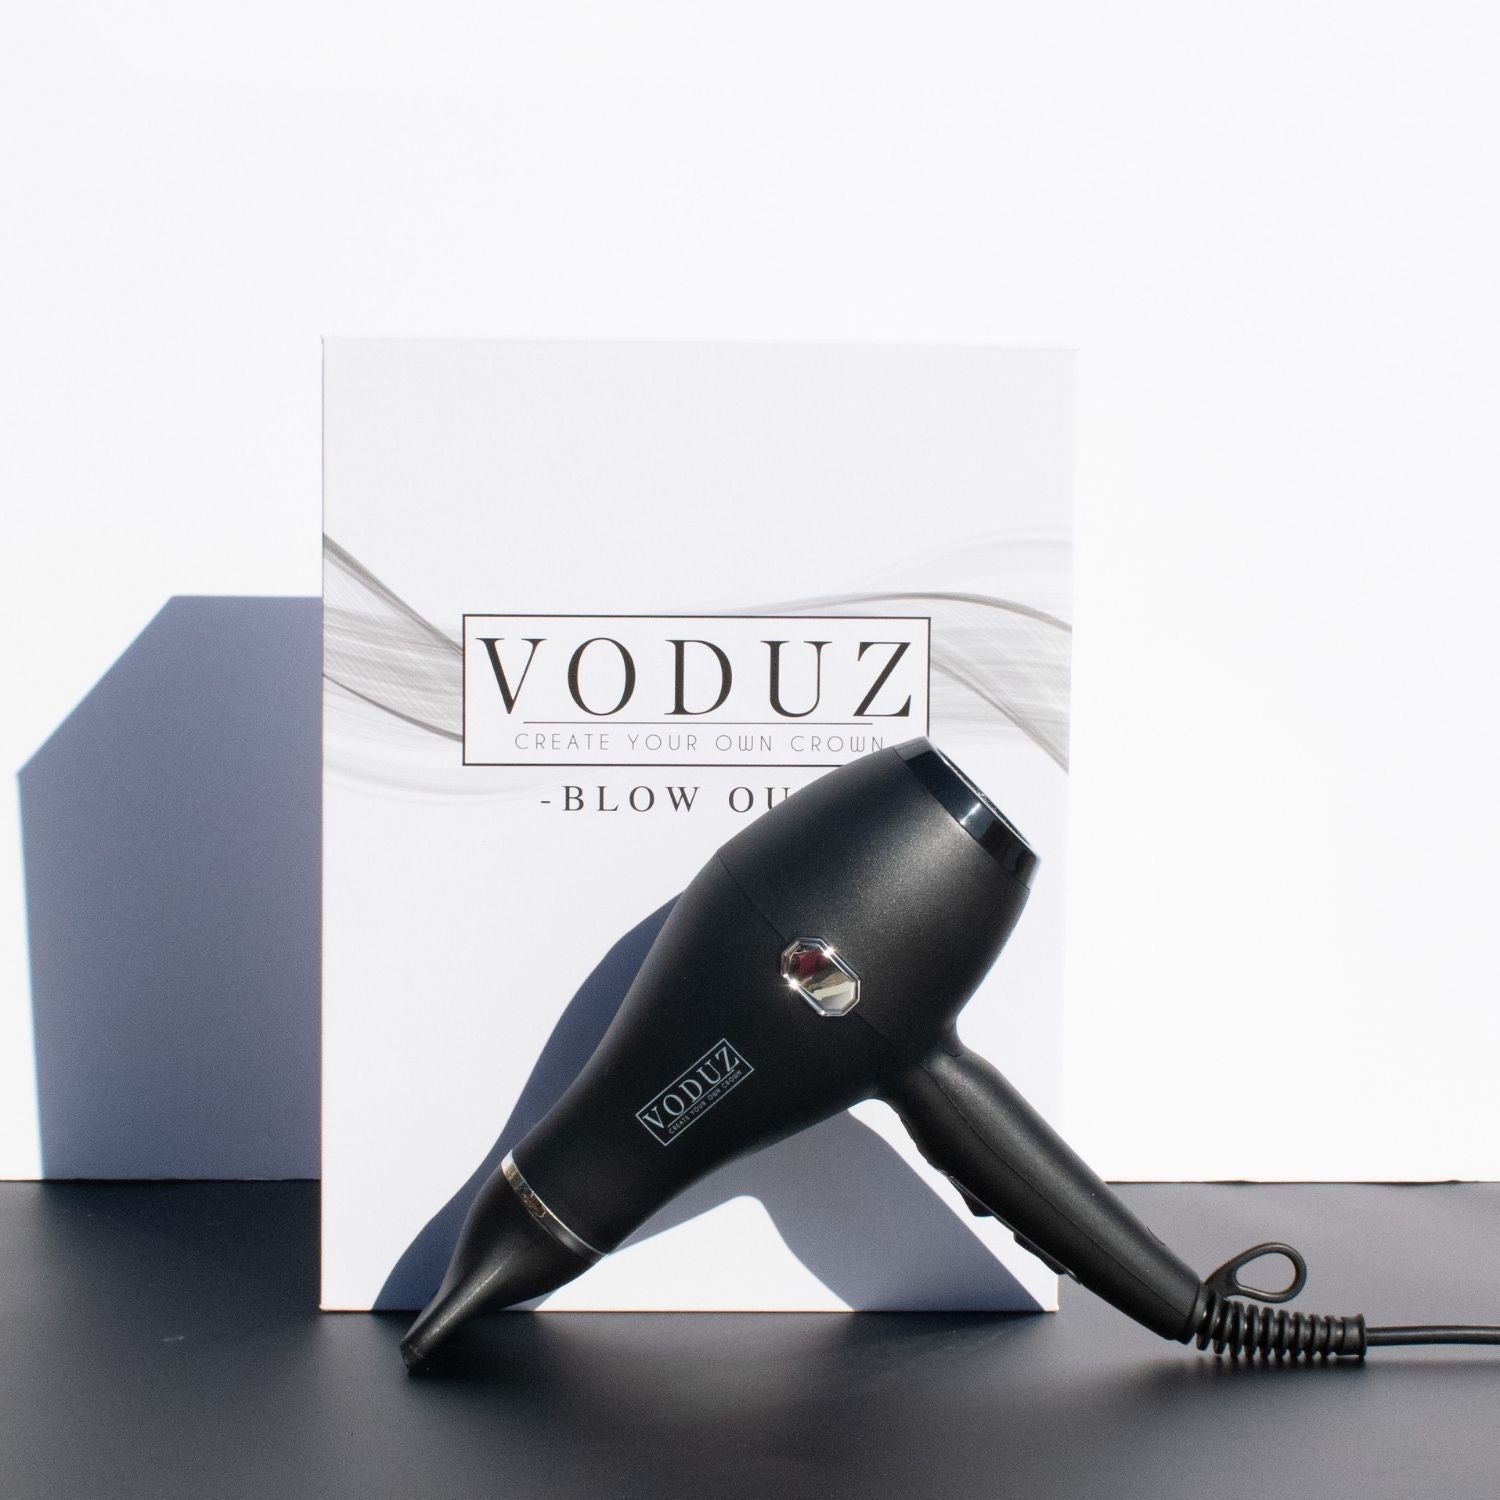 Voduz Blow Out - Black Infrared Hair Dryer 2 Shaws Department Stores